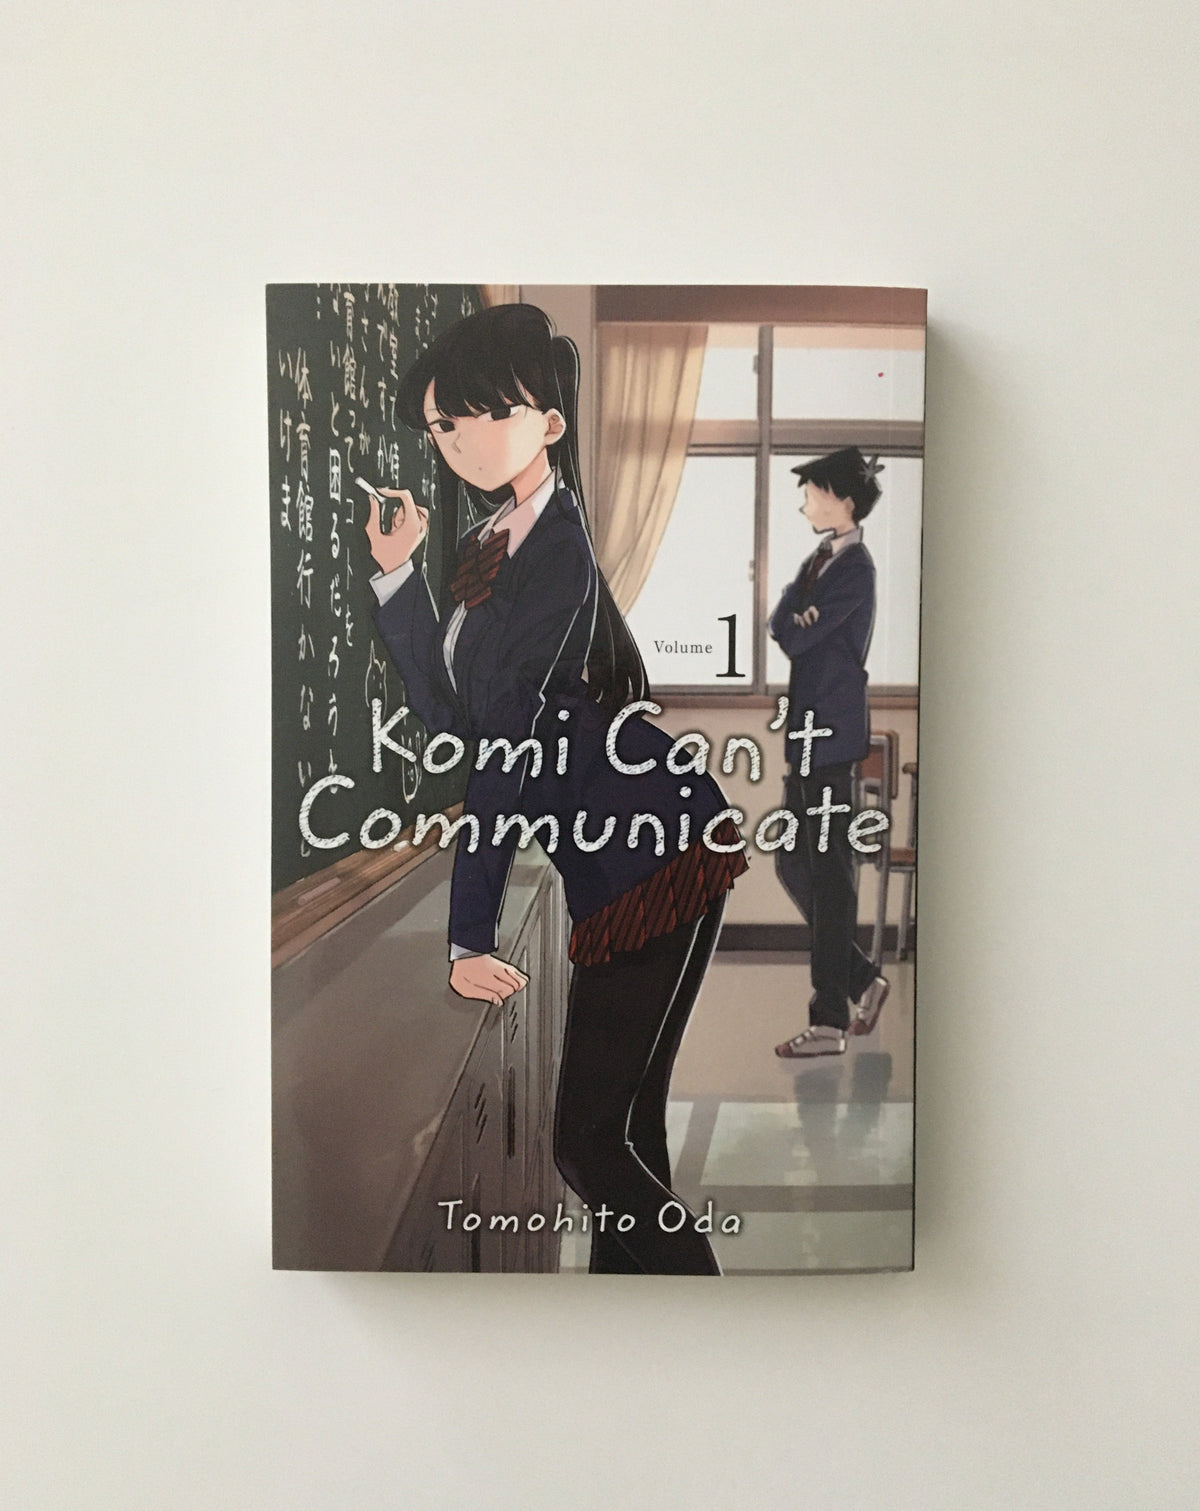 Komi Can&#39;t Communicate by Tomohito Odo, book, Ten Dollar Books, Ten Dollar Books